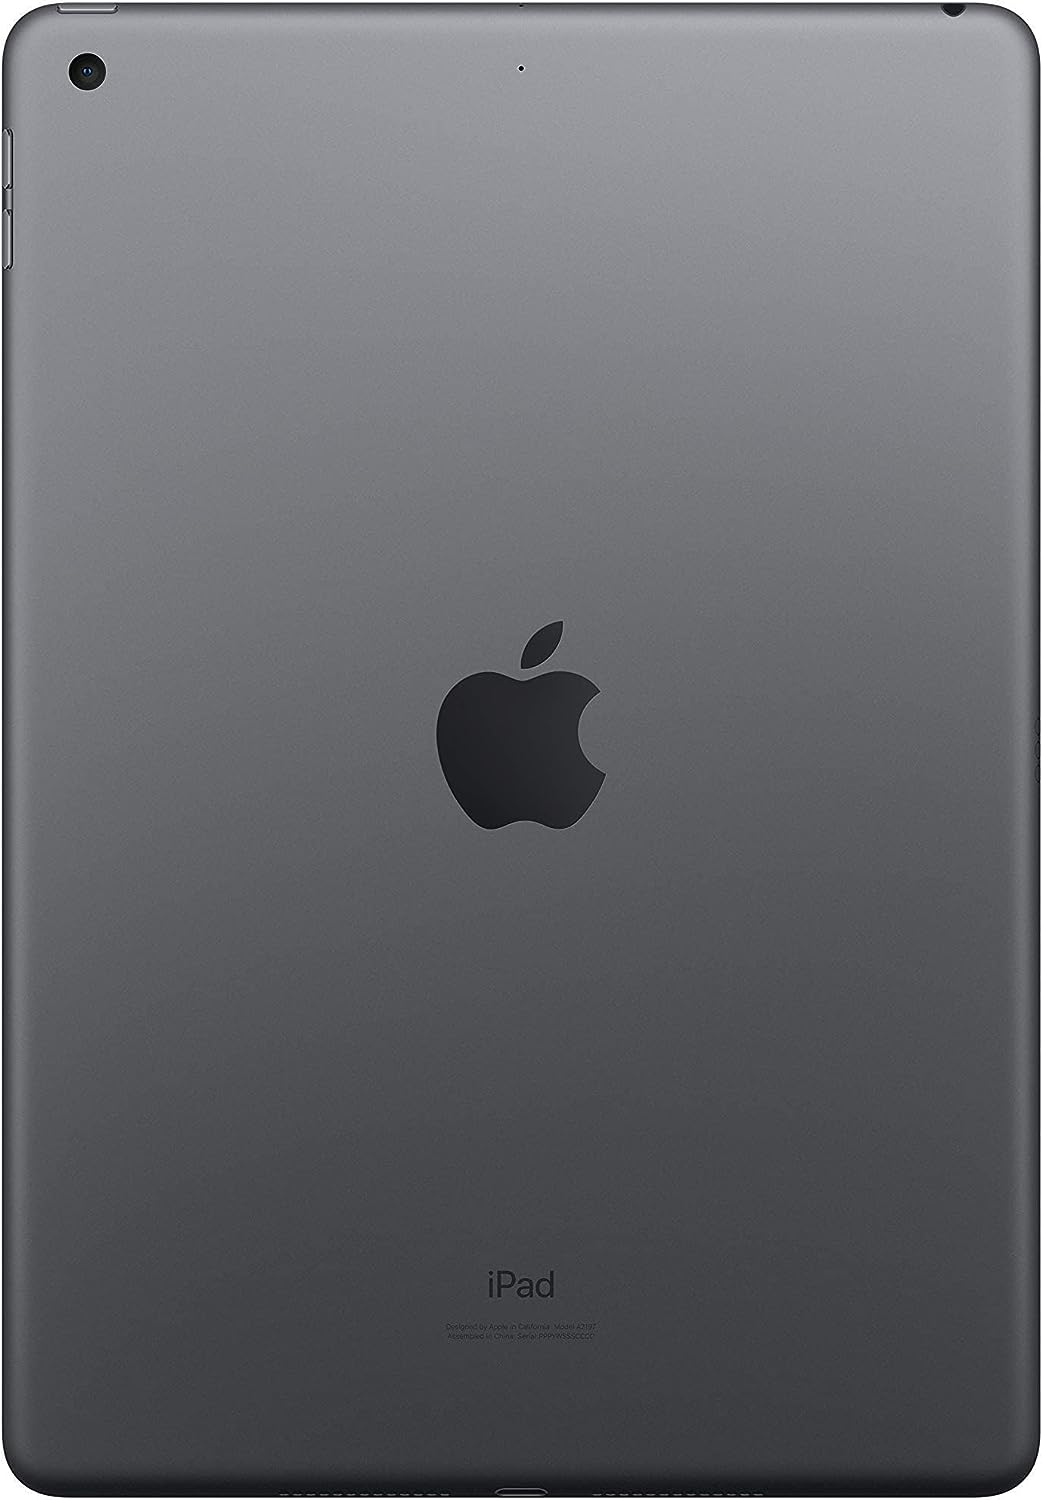 Apple iPad 7th Gen Tablet - Space Grey - Wi-Fi Only - 32GB Storage